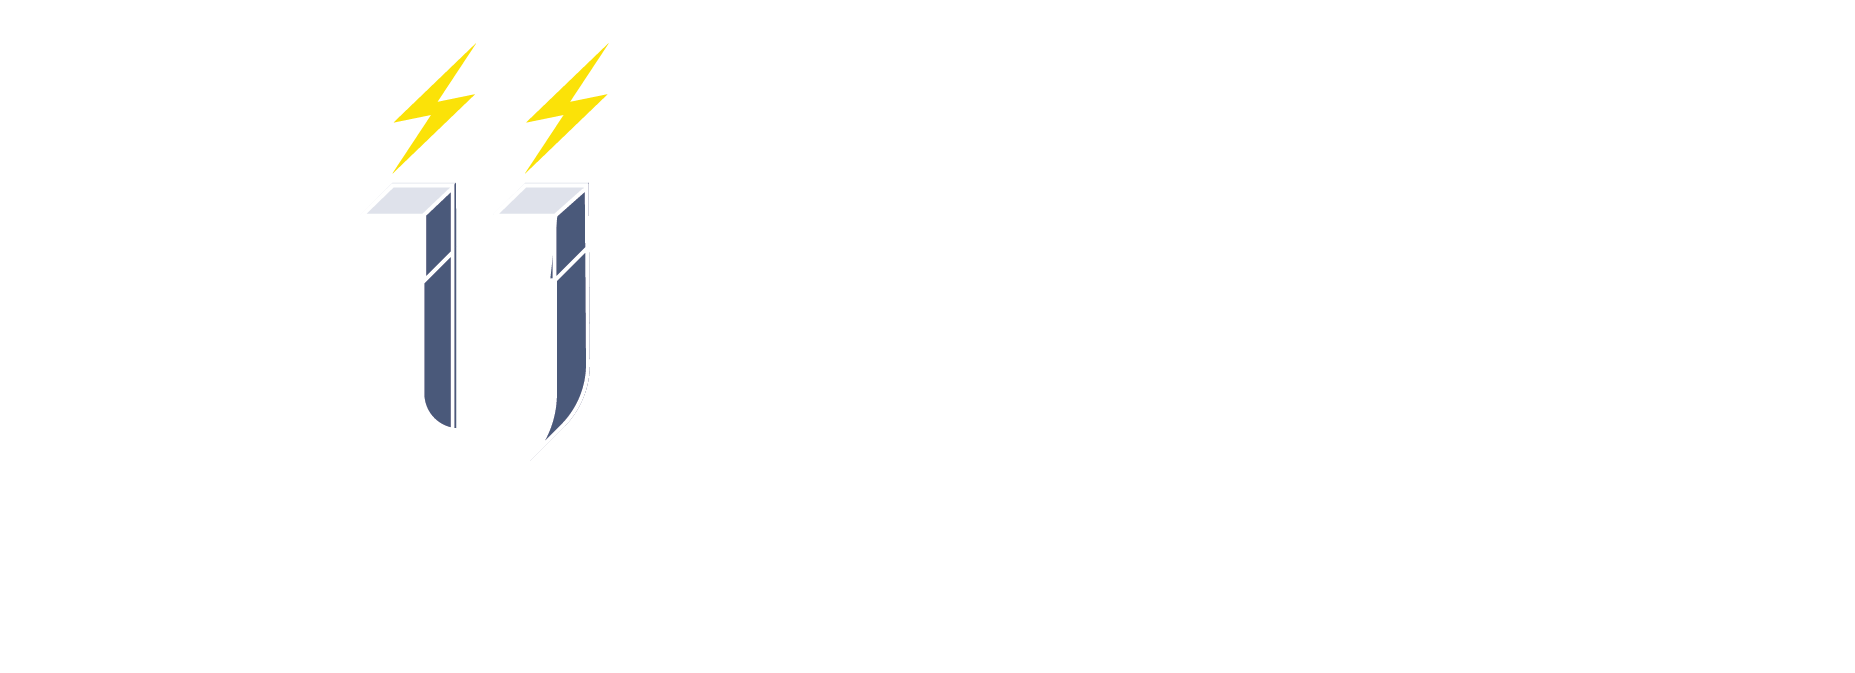 Gunnar Energy Services